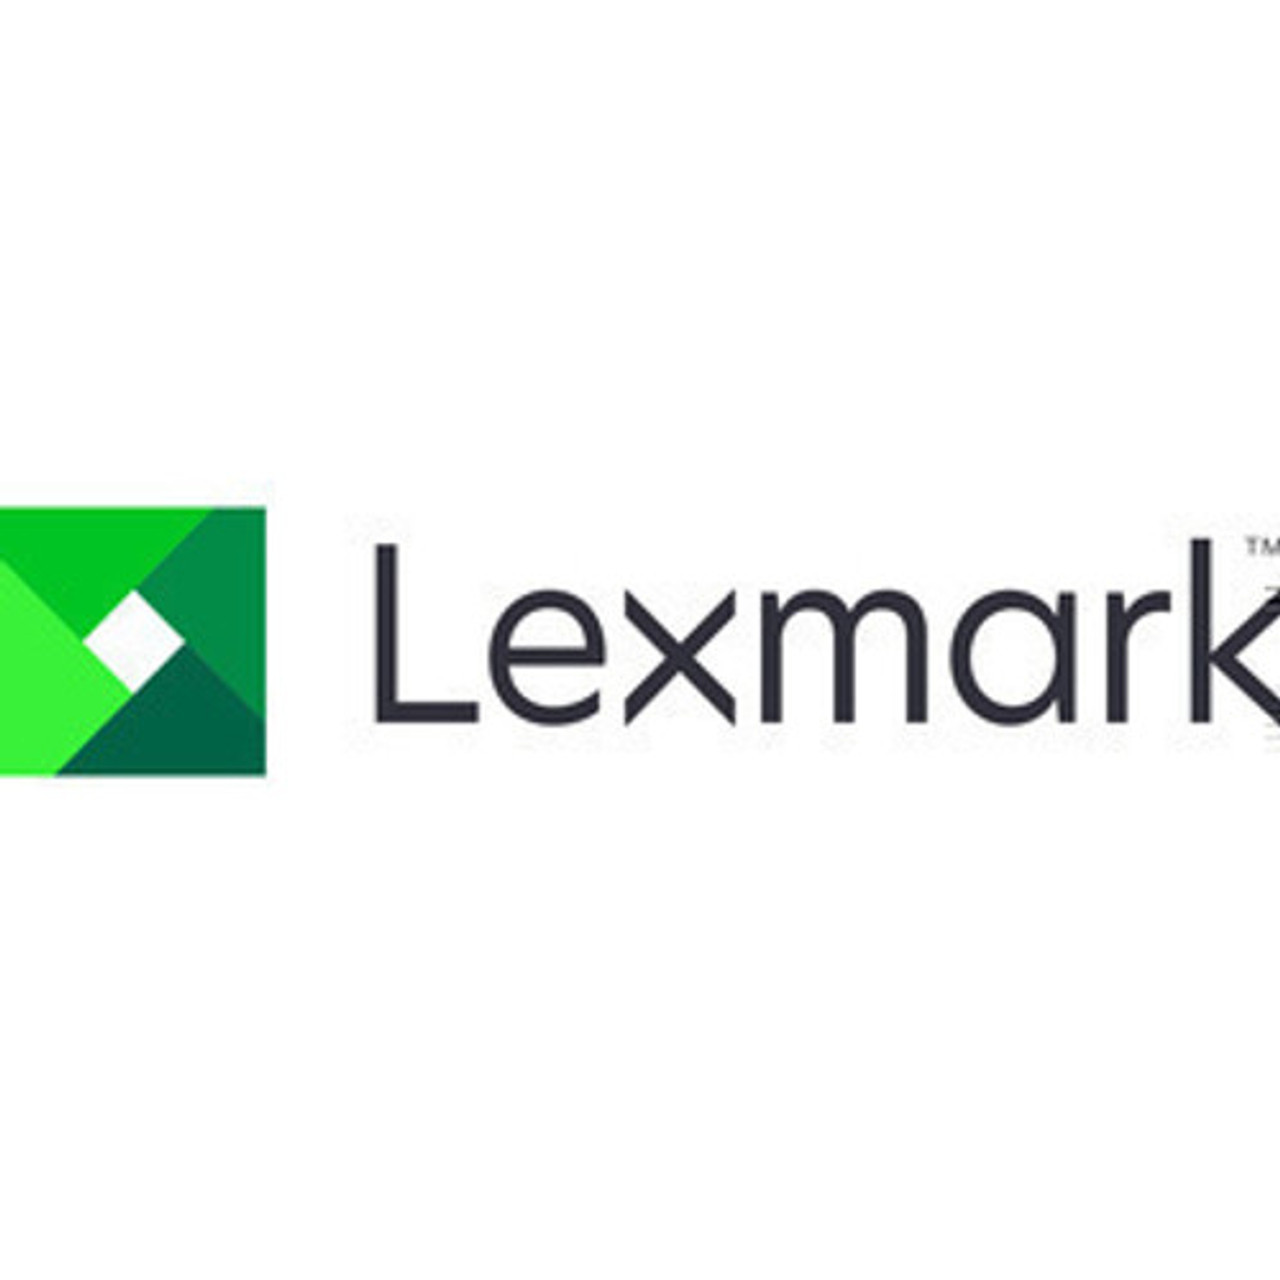 Lexmark MX711 1-Year Onsite Service - 2355136